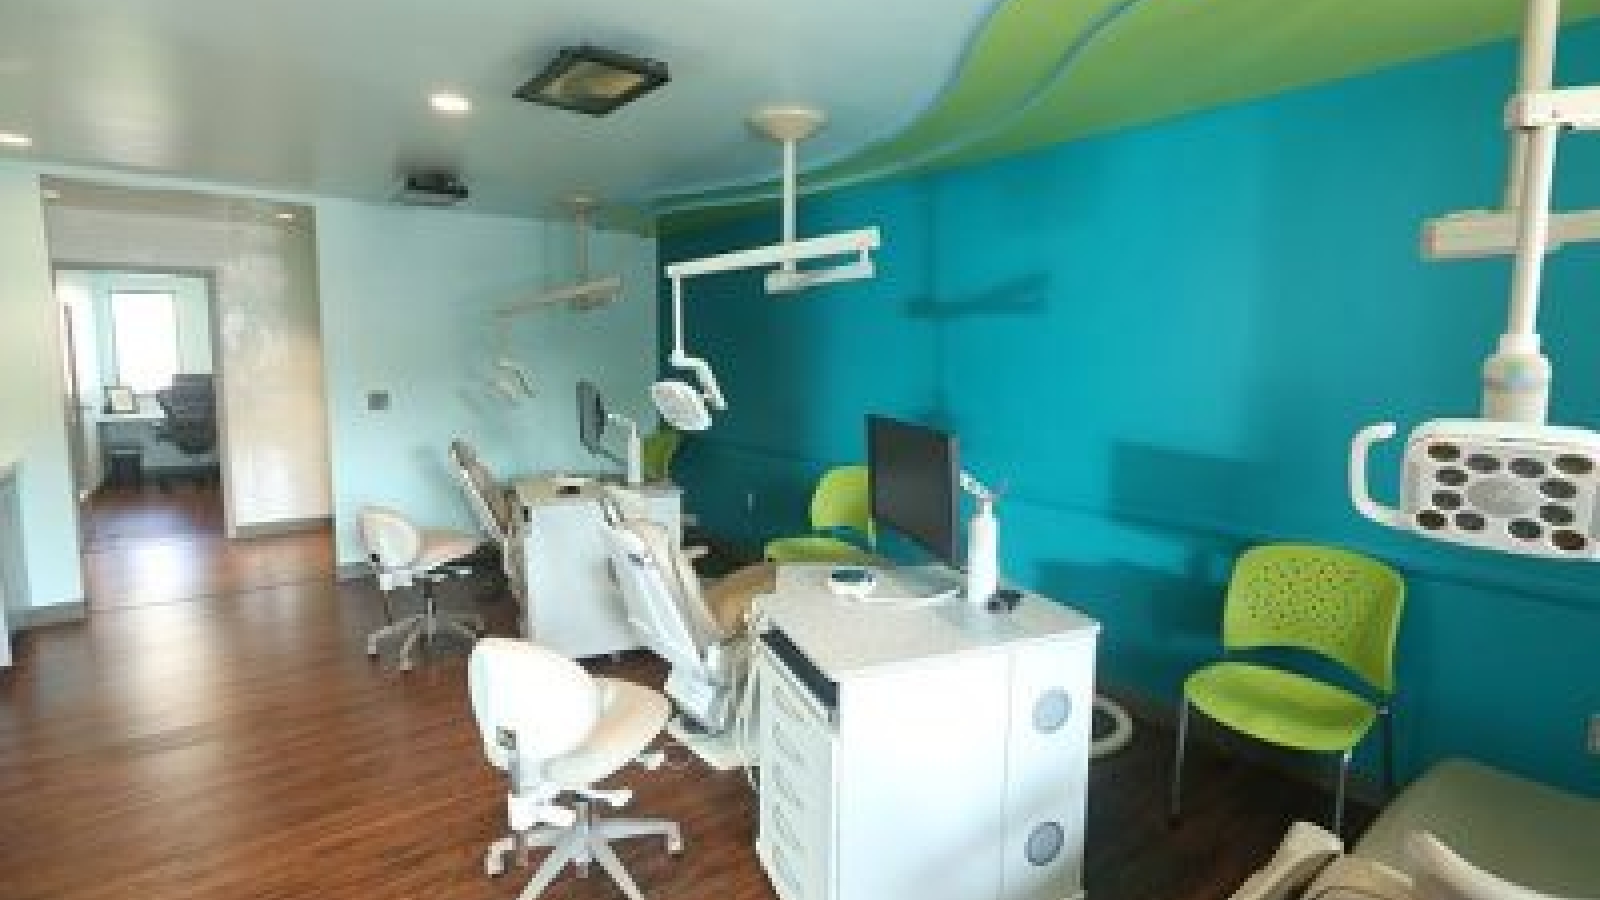 Dentistry office and examination room